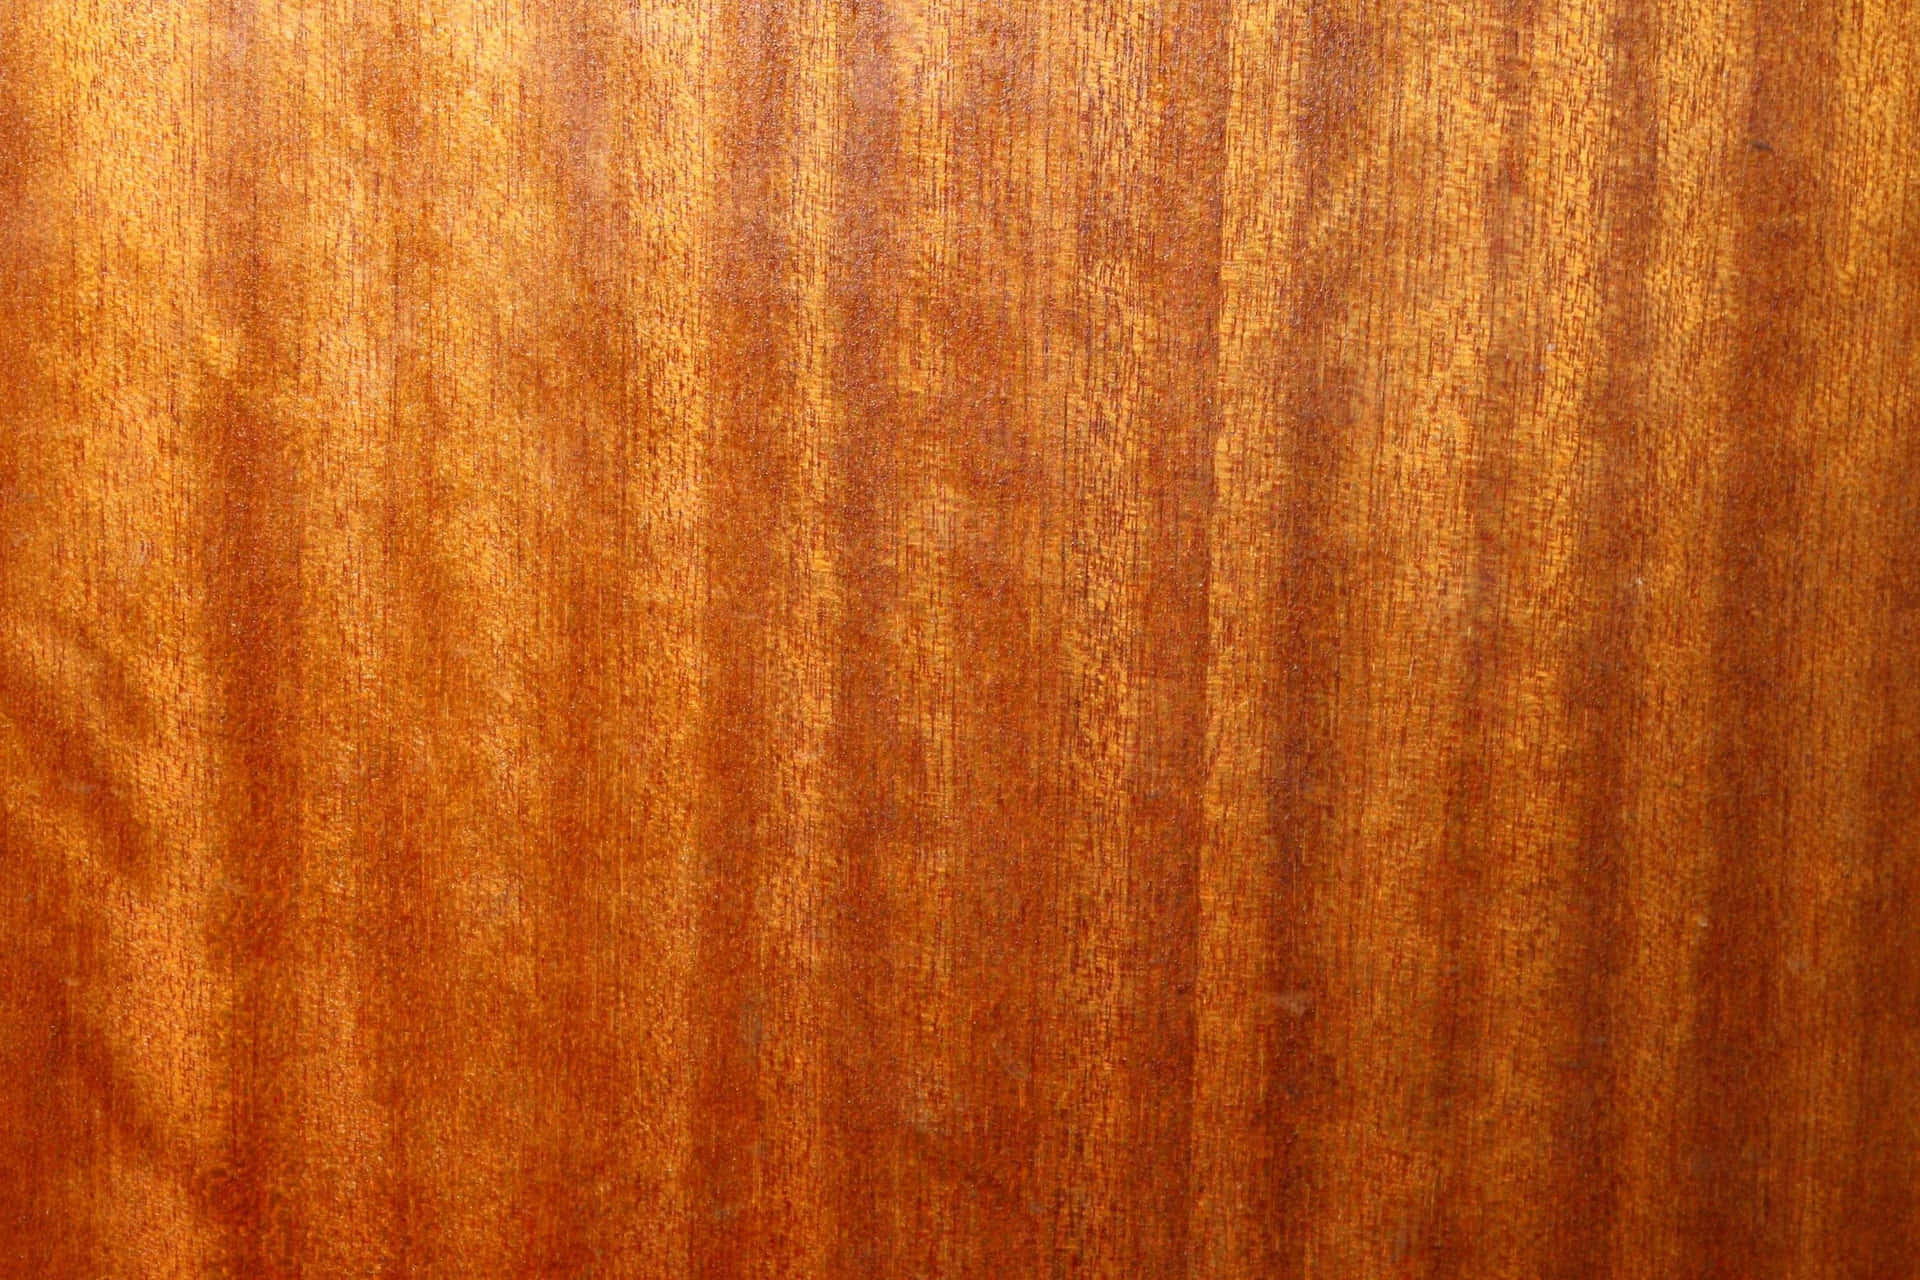 Rustic Wood Grain Background